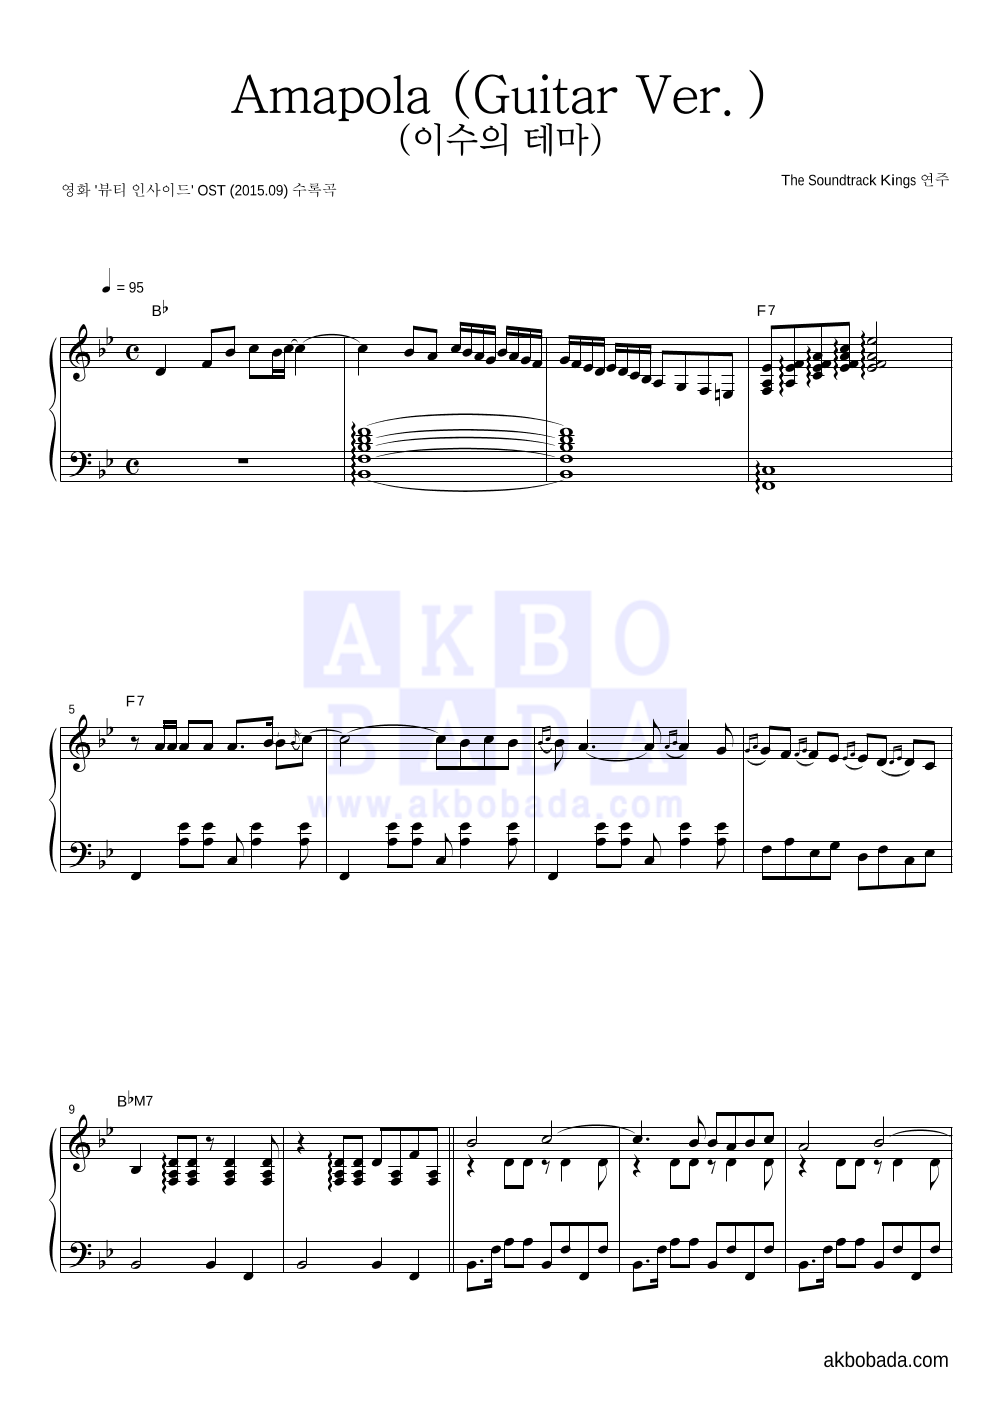 The Soundtrack Kings - Amapola (Guitar Ver.) (이수의 테마) 피아노 2단 악보 